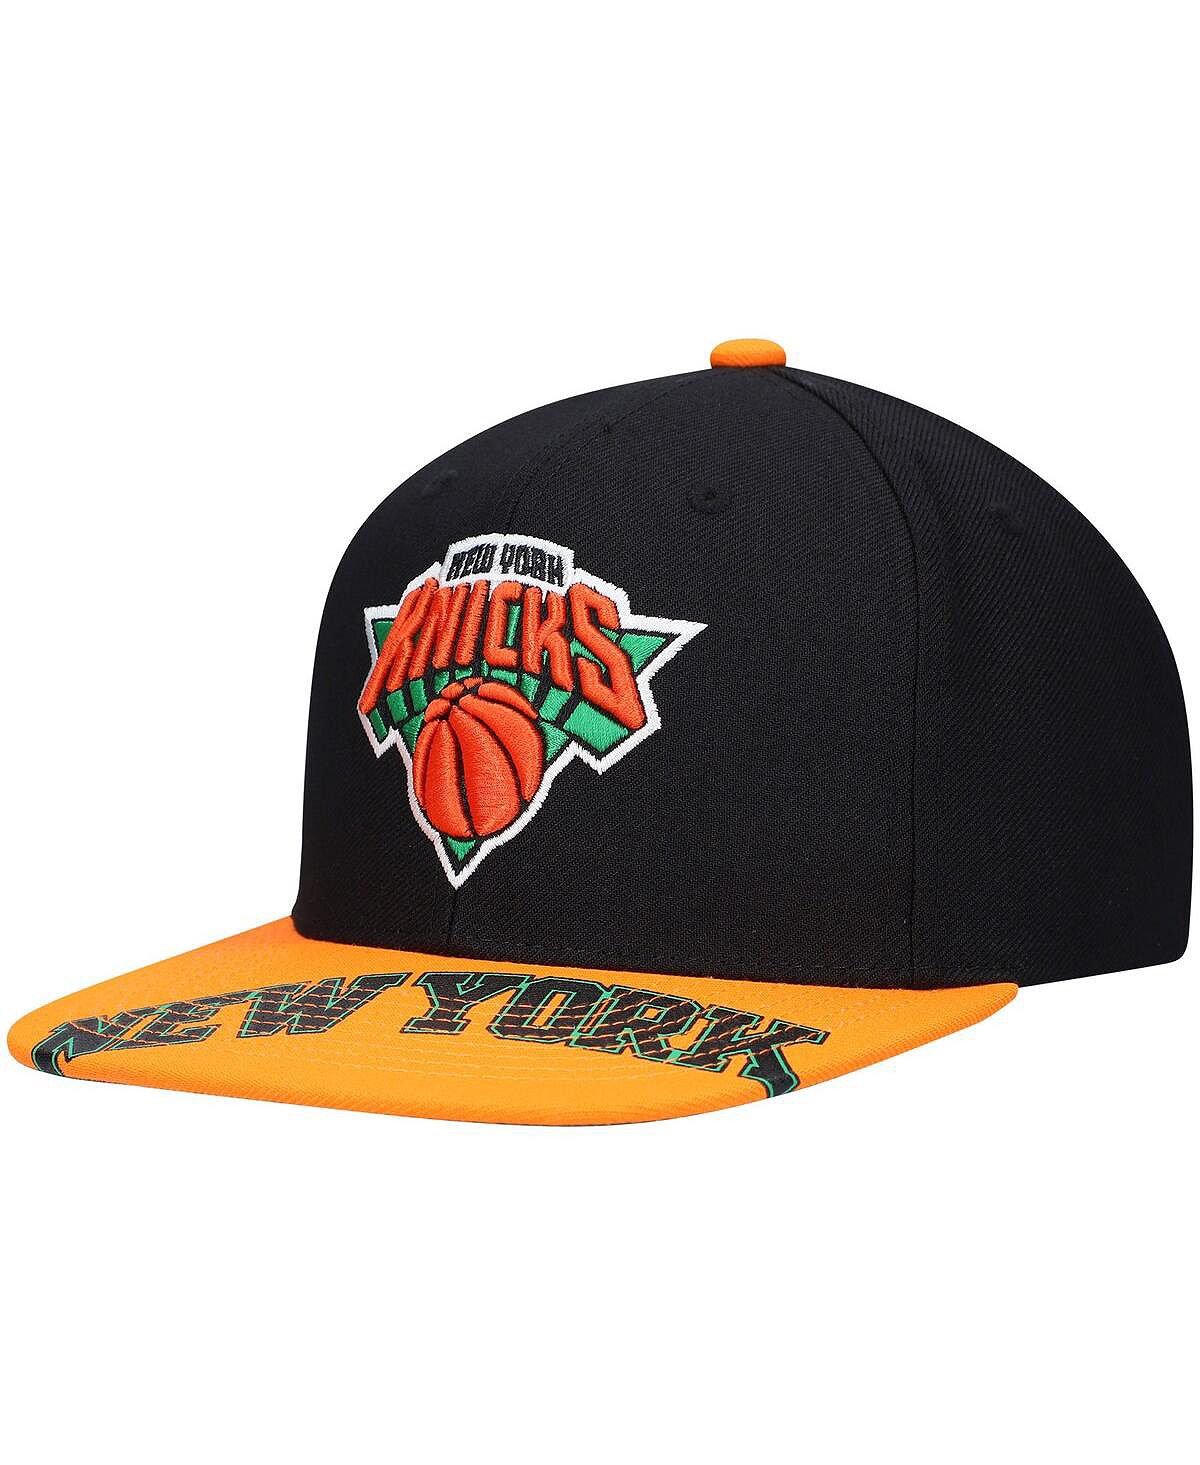 Мужская кепка с крышками черного и оранжевого цвета New York Knicks Current Reload 3.0 Snapback Mitchell & Ness вентилятор hx 302 16см 6 24v 12 15w диммер безлопастной black orange mitchell